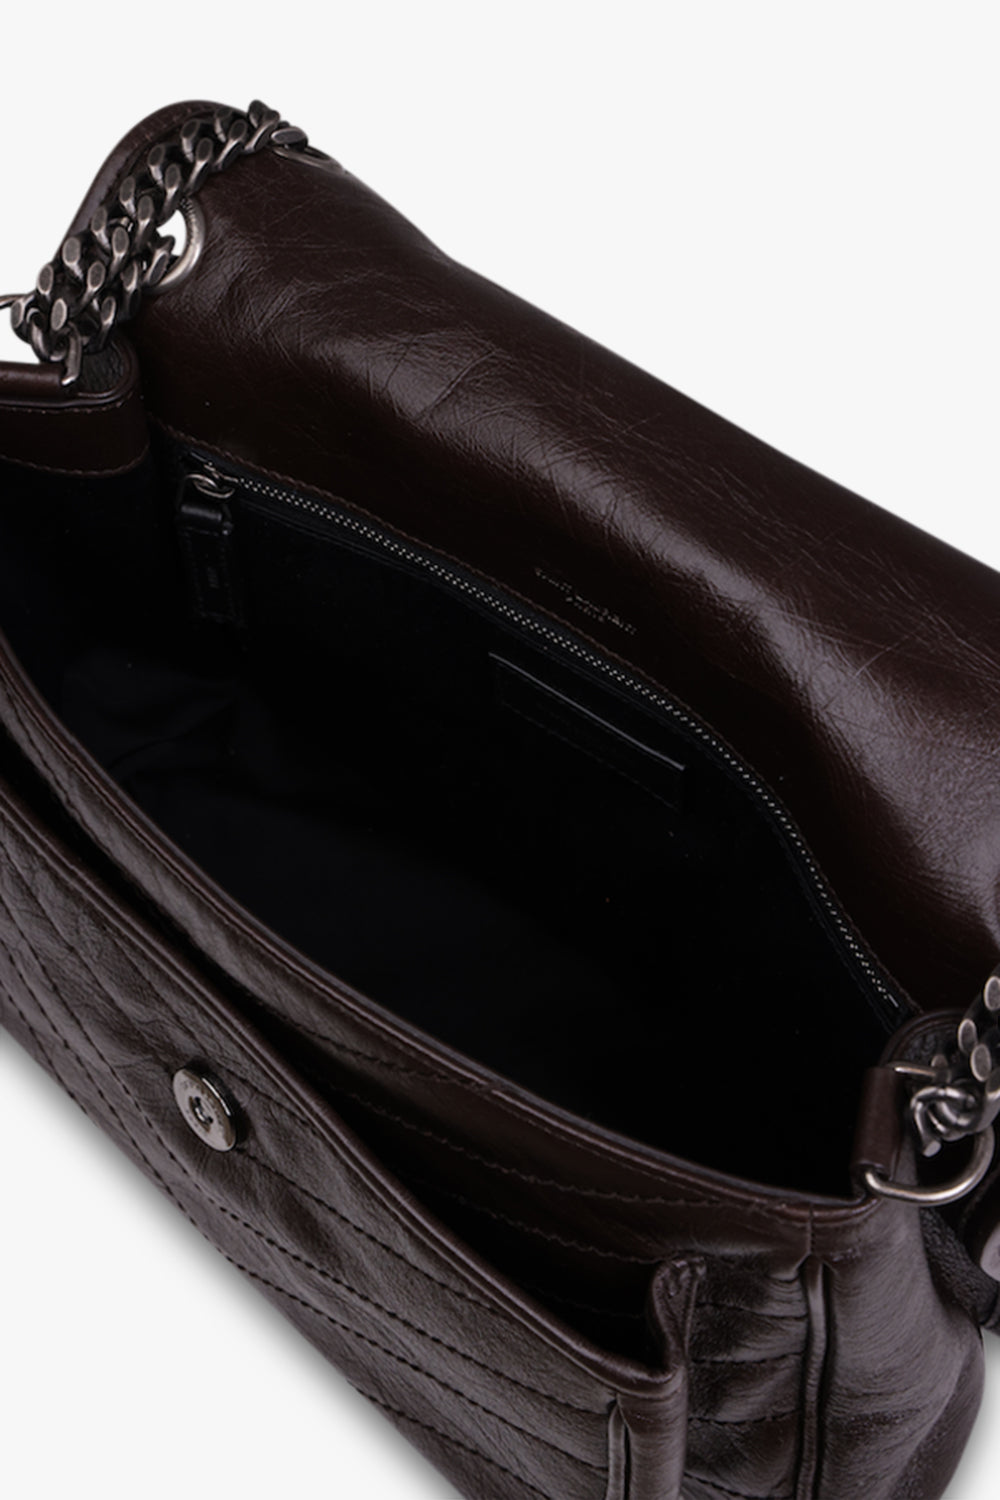 SAINT LAURENT BAGS BROWN NIKI MEDIUM CRINKLED BAG | CHOCOLATE NOIR